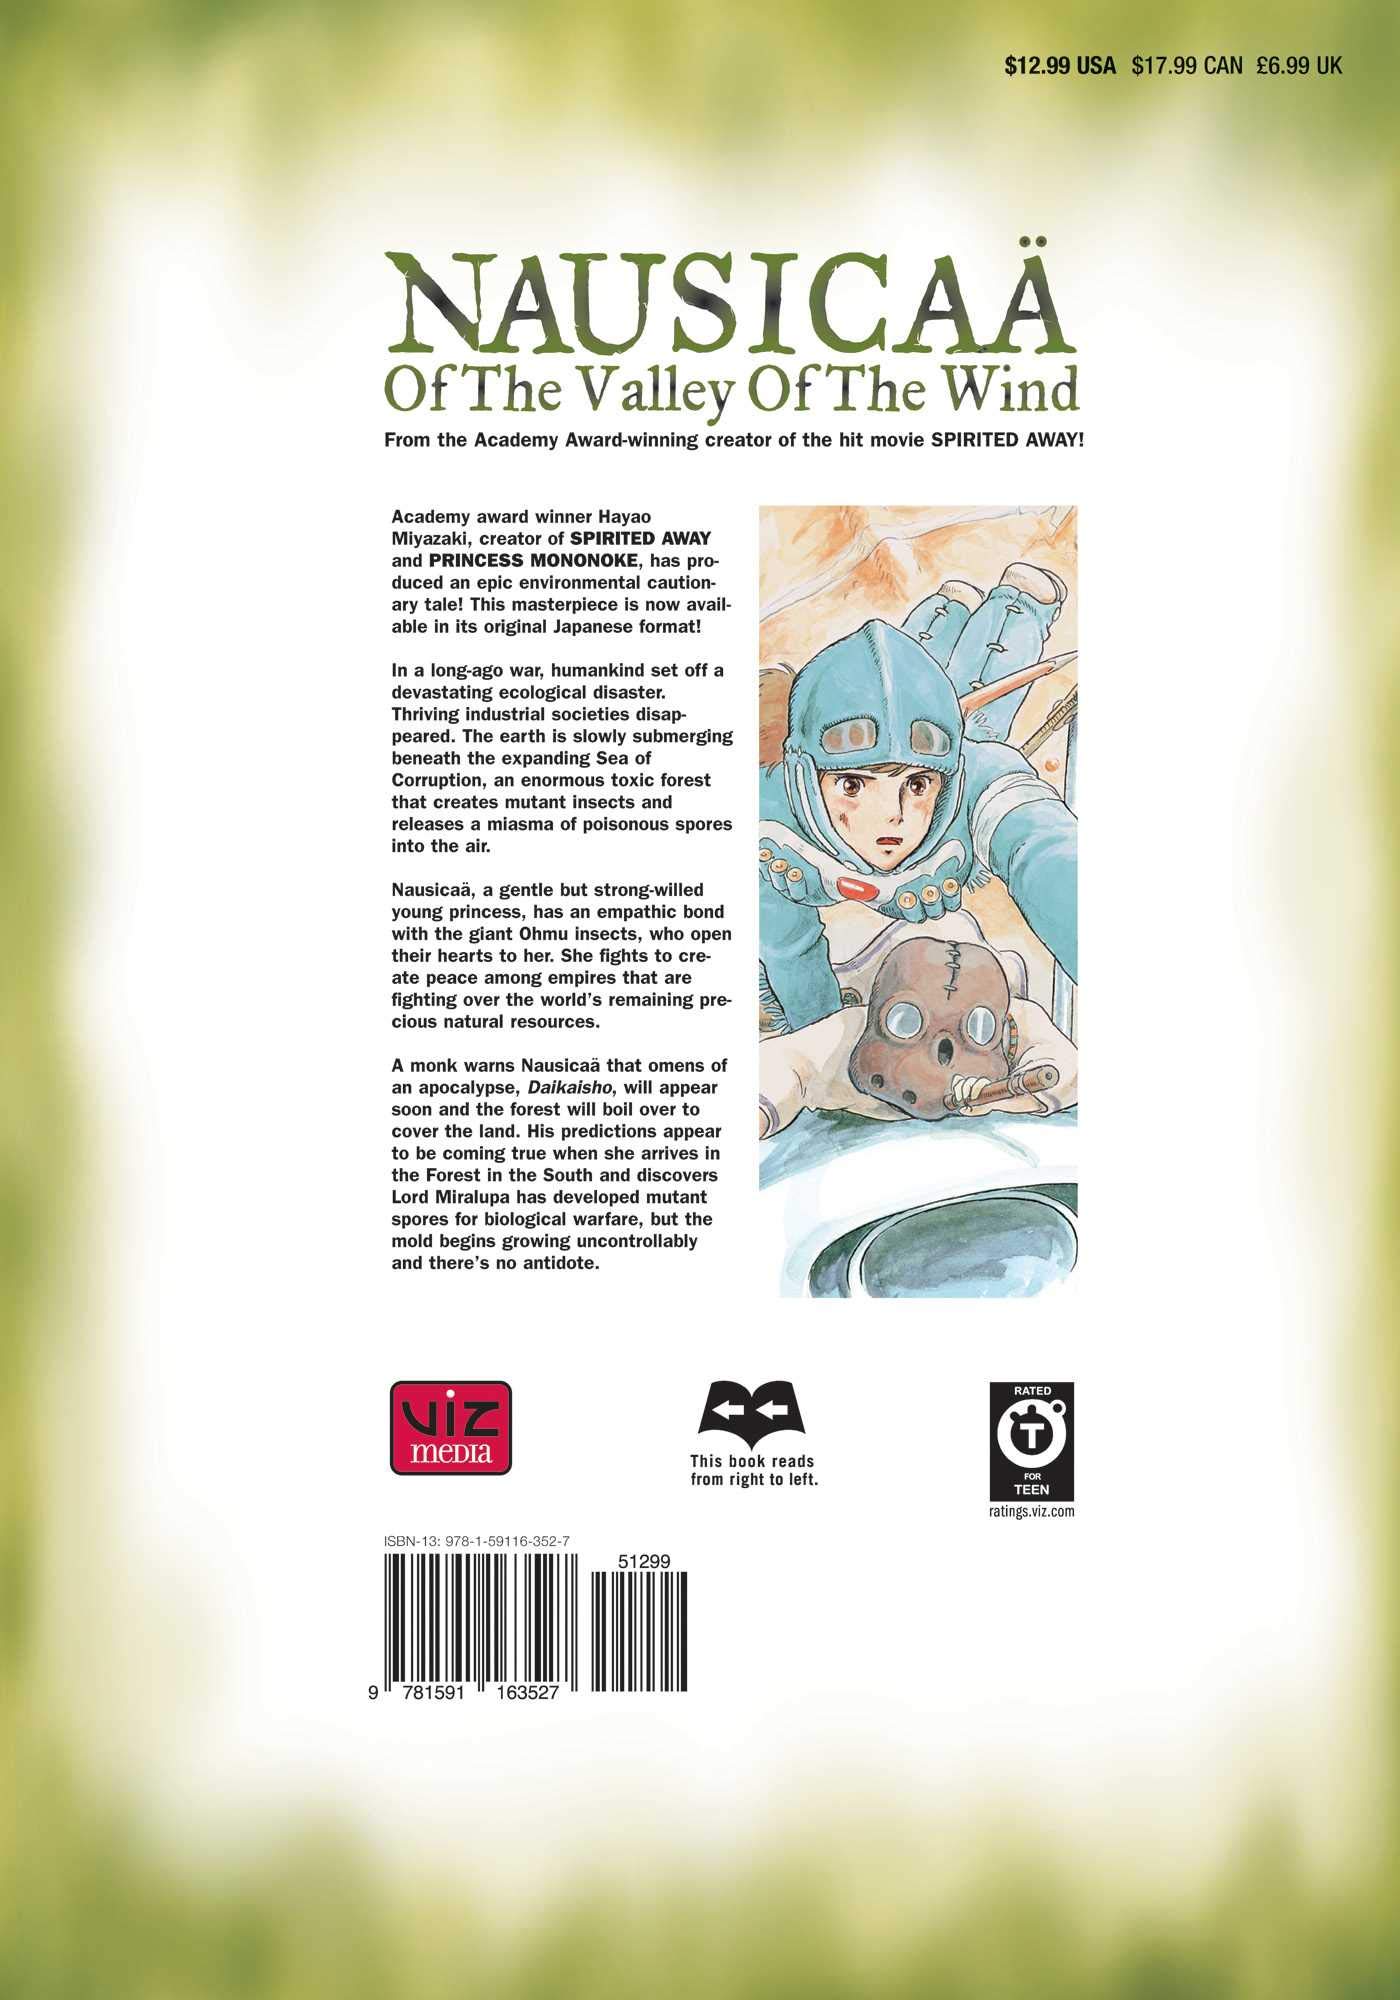 Nausicaä of the Valley of the Wind, Vol. 1 by Hayao Miyazaki